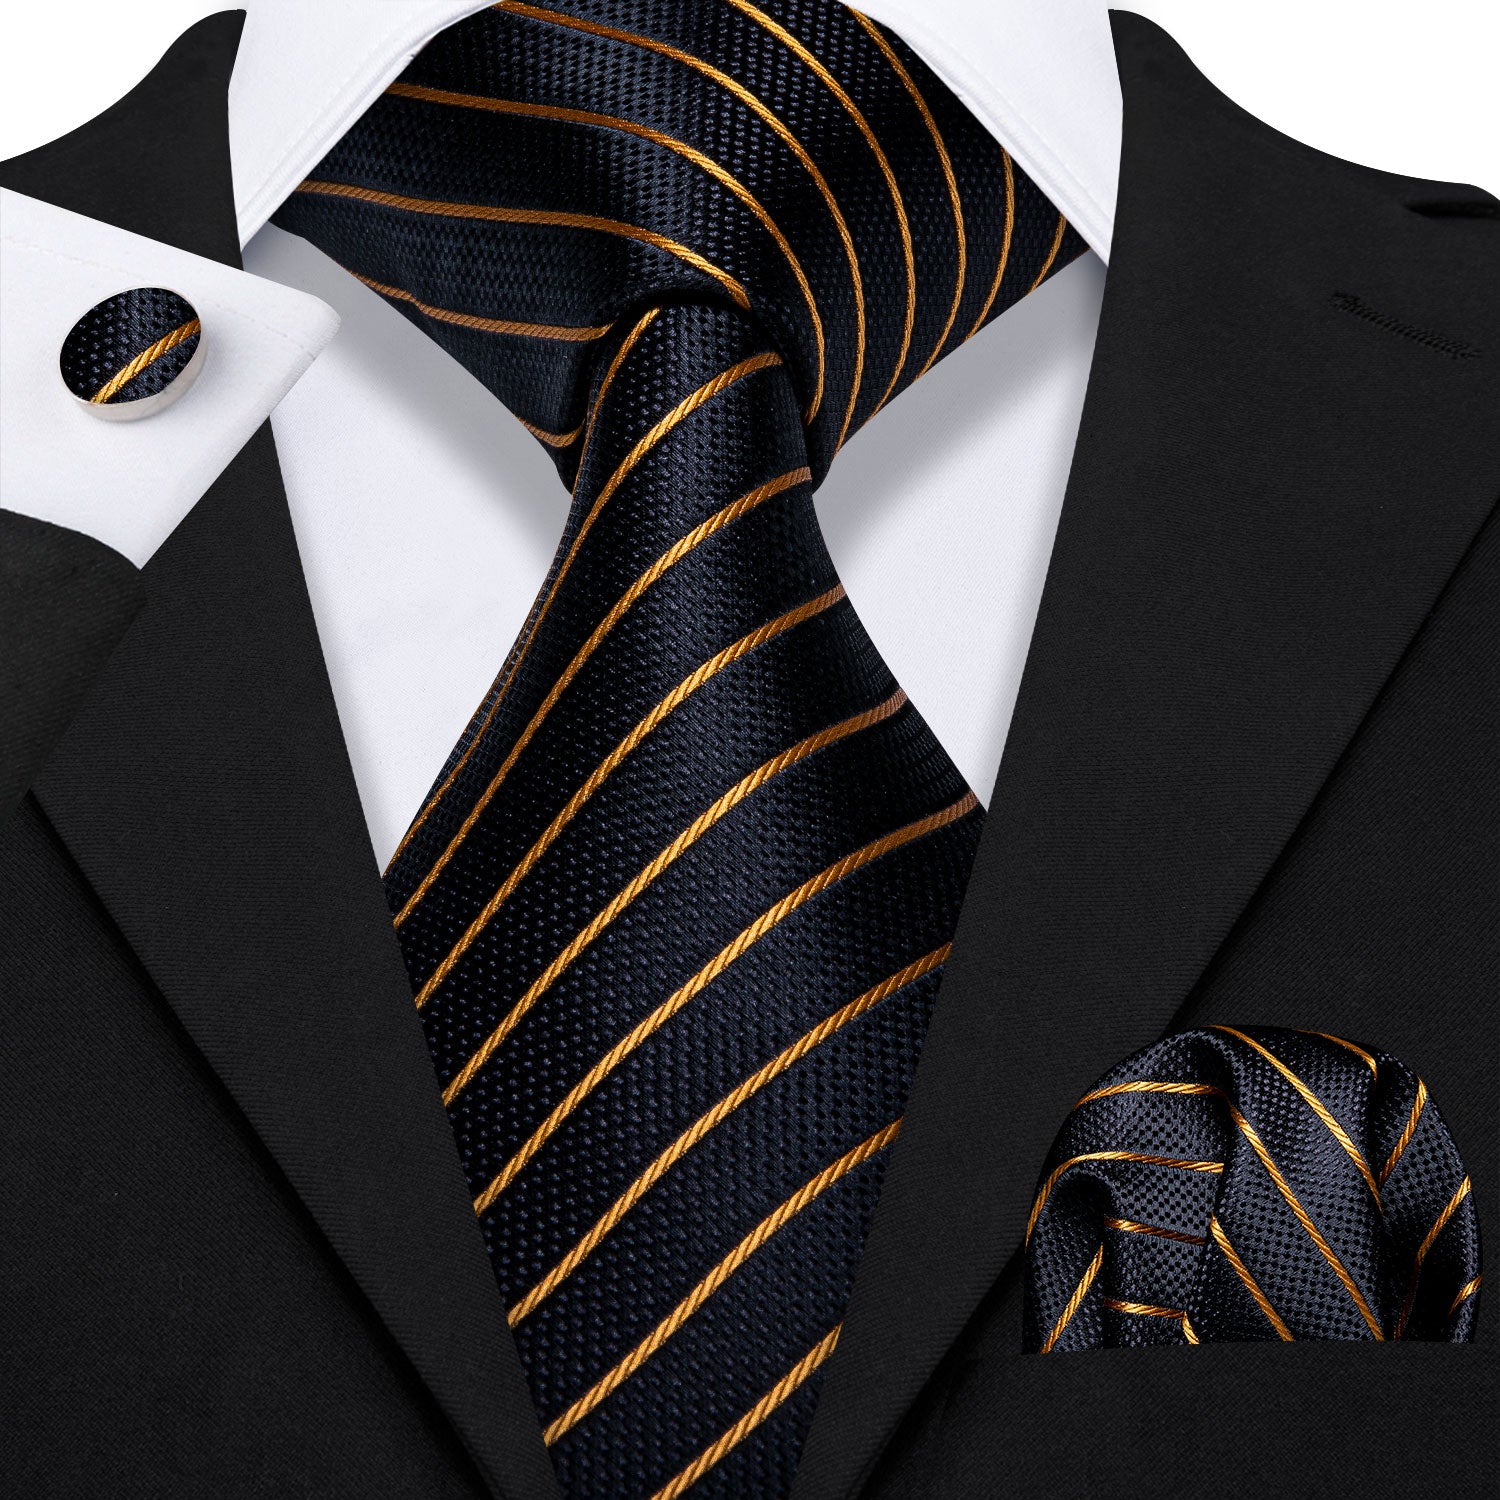 Gold Color Black Stripe Men's Tie Lapel Pin Brooch Silk Tie Hanky Cufflinks Set Wedding Business Party